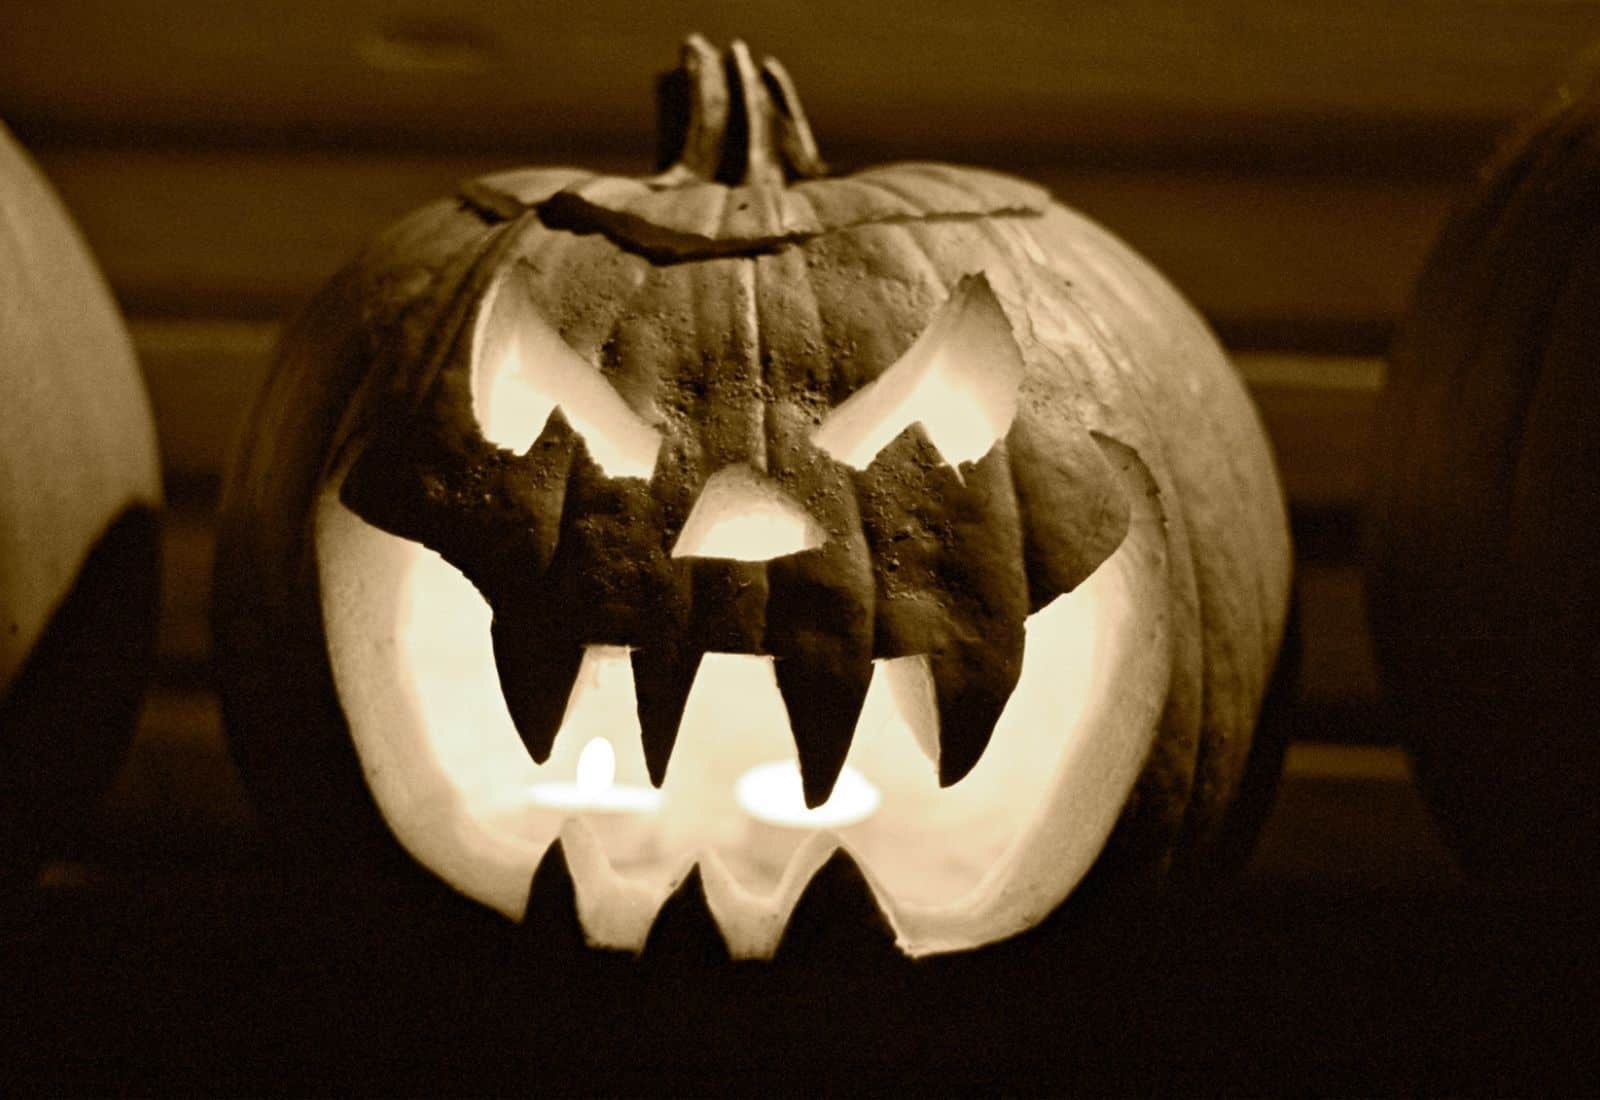 Big mouth scary pumpkin